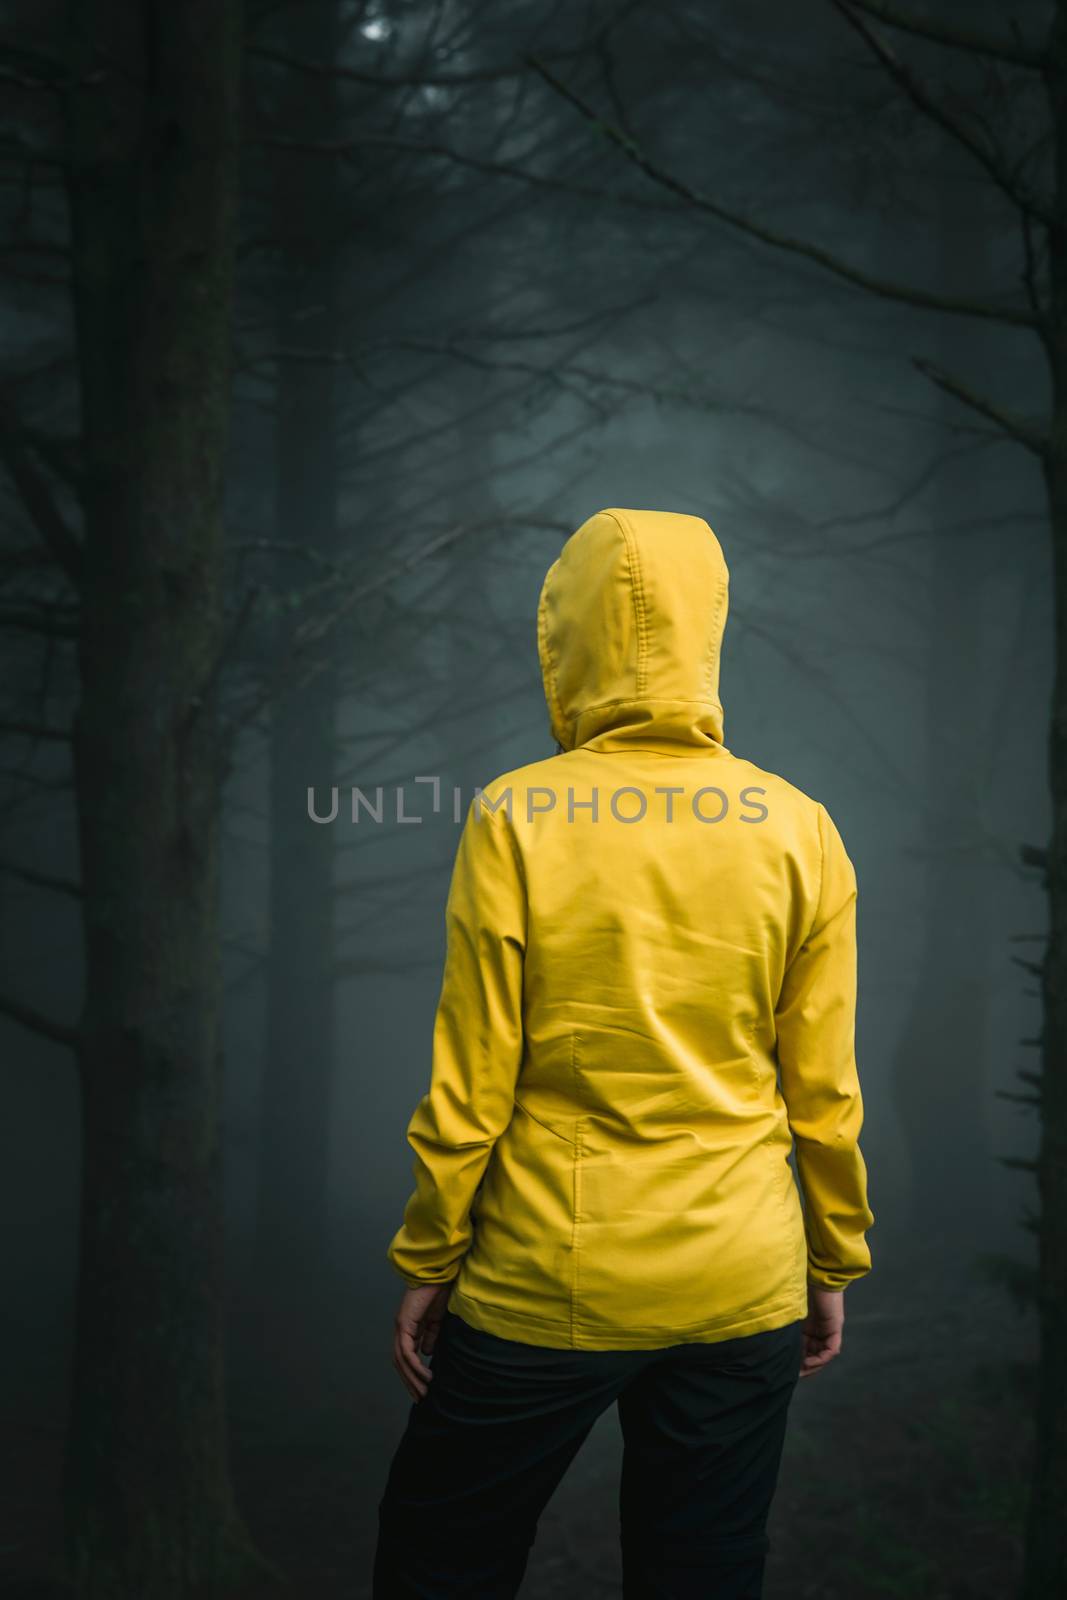 Female traveler enjoying the forest on a foggy morning